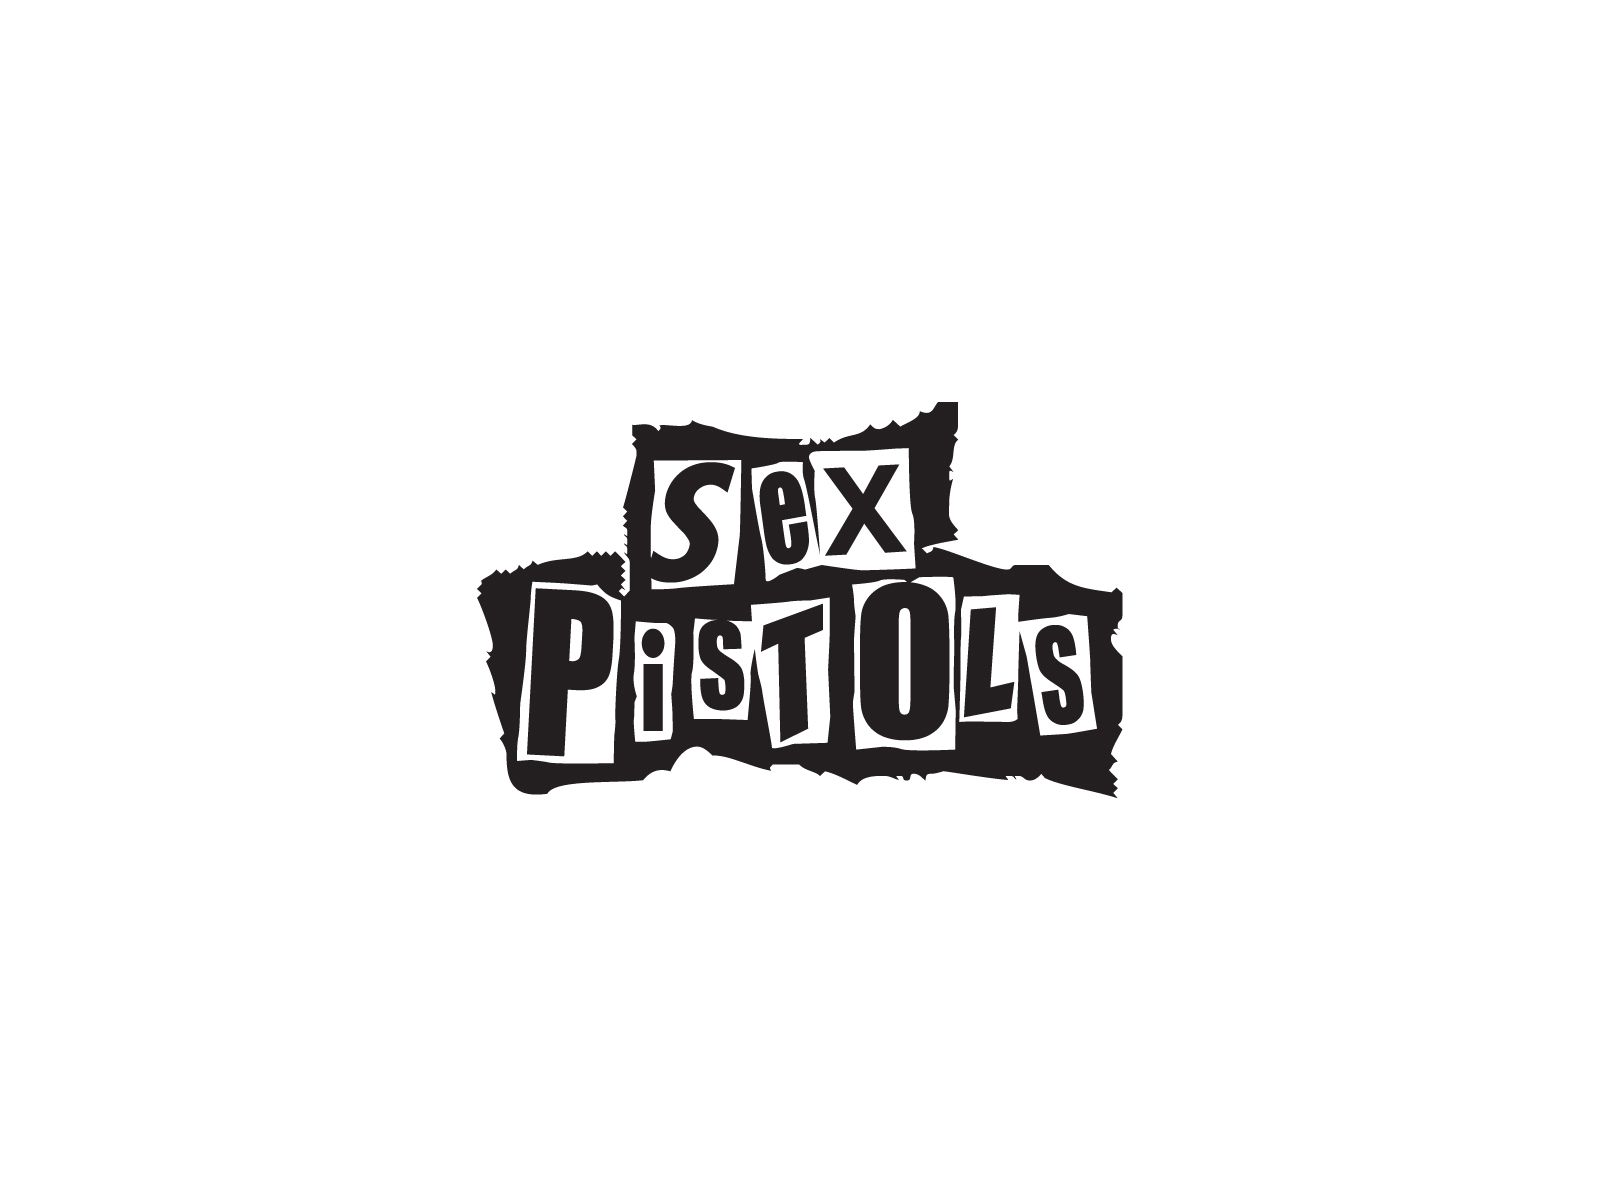 Music Sex Pistols 1600x1200